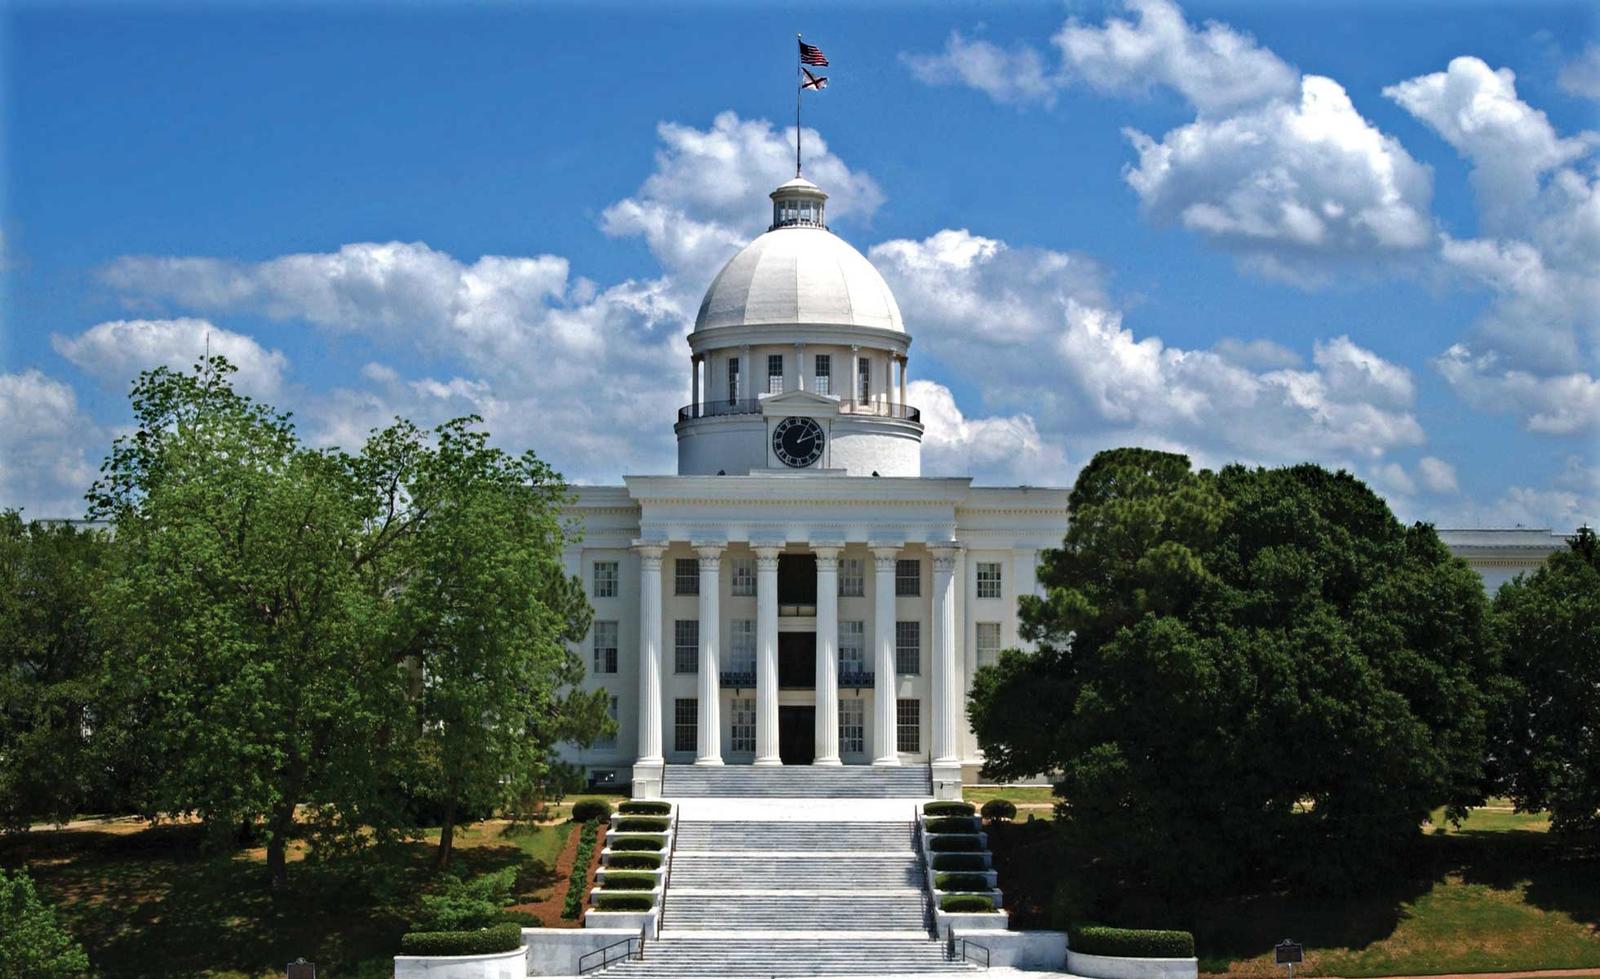 http://www.net4info.de/photos/cpg/albums/userpics/10001/Alabama_State_Capitol.jpg